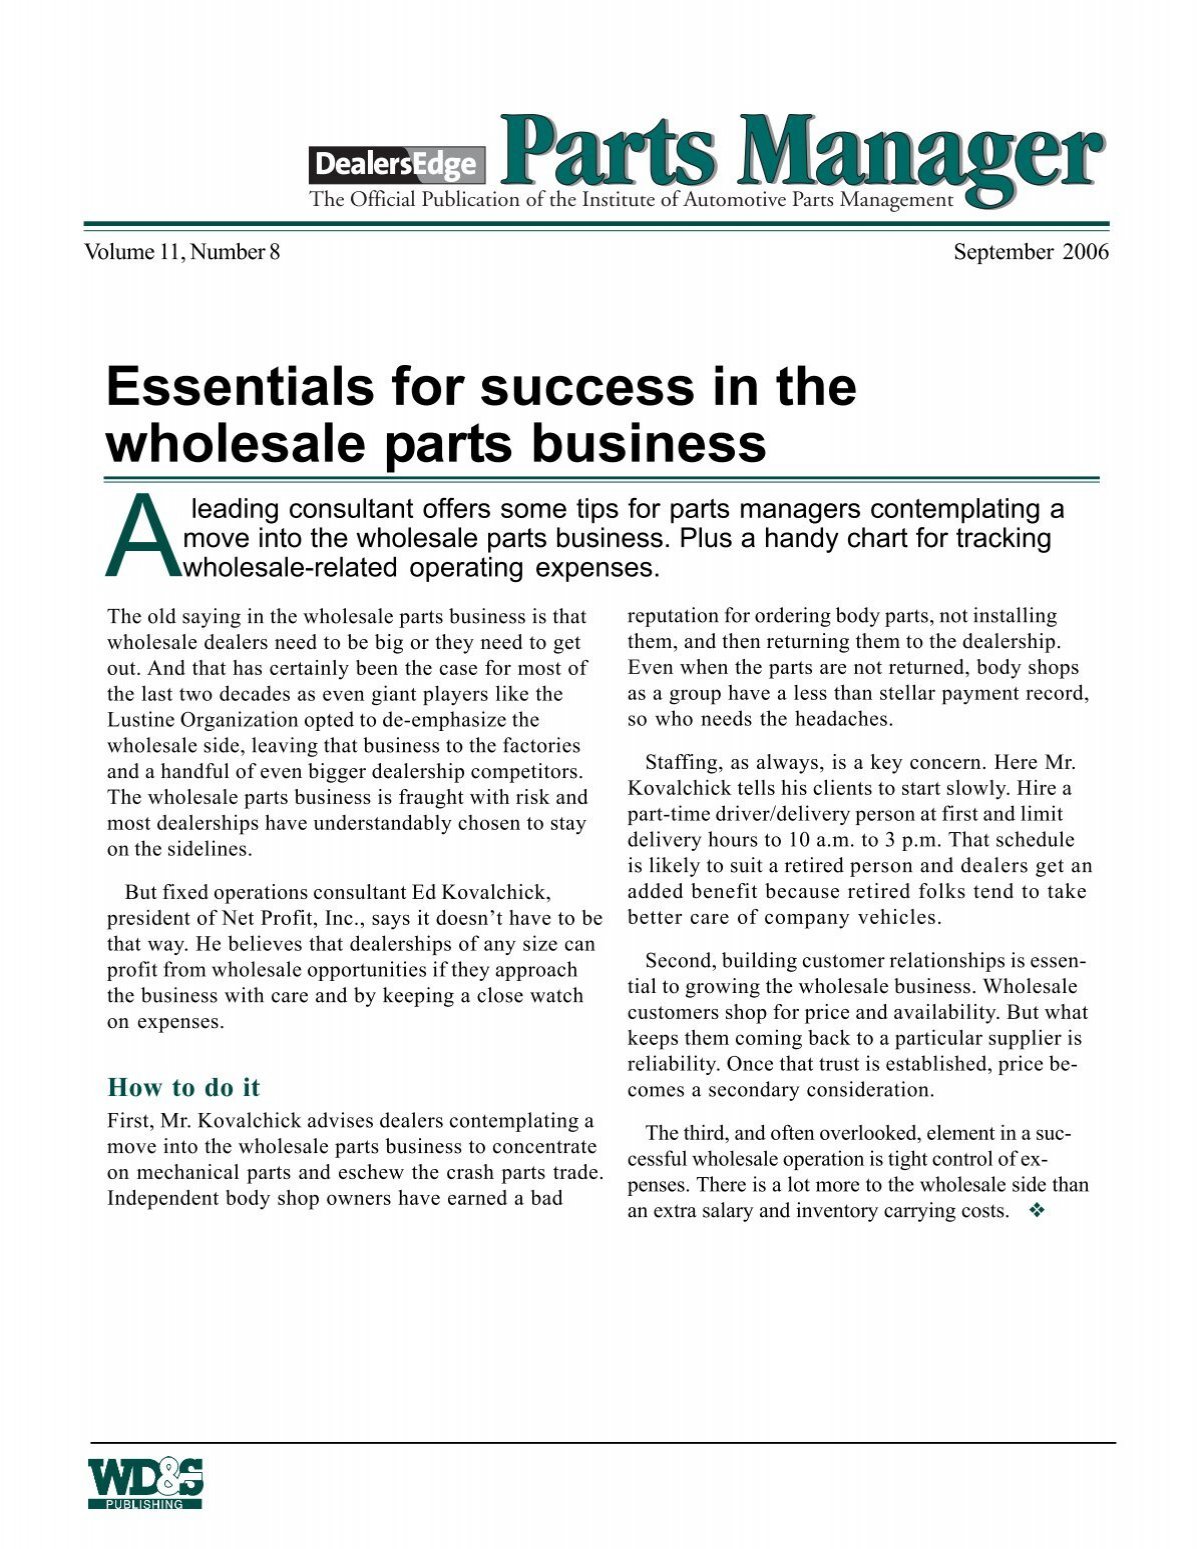 Essentials for success in the wholesale parts business - DealersEdge